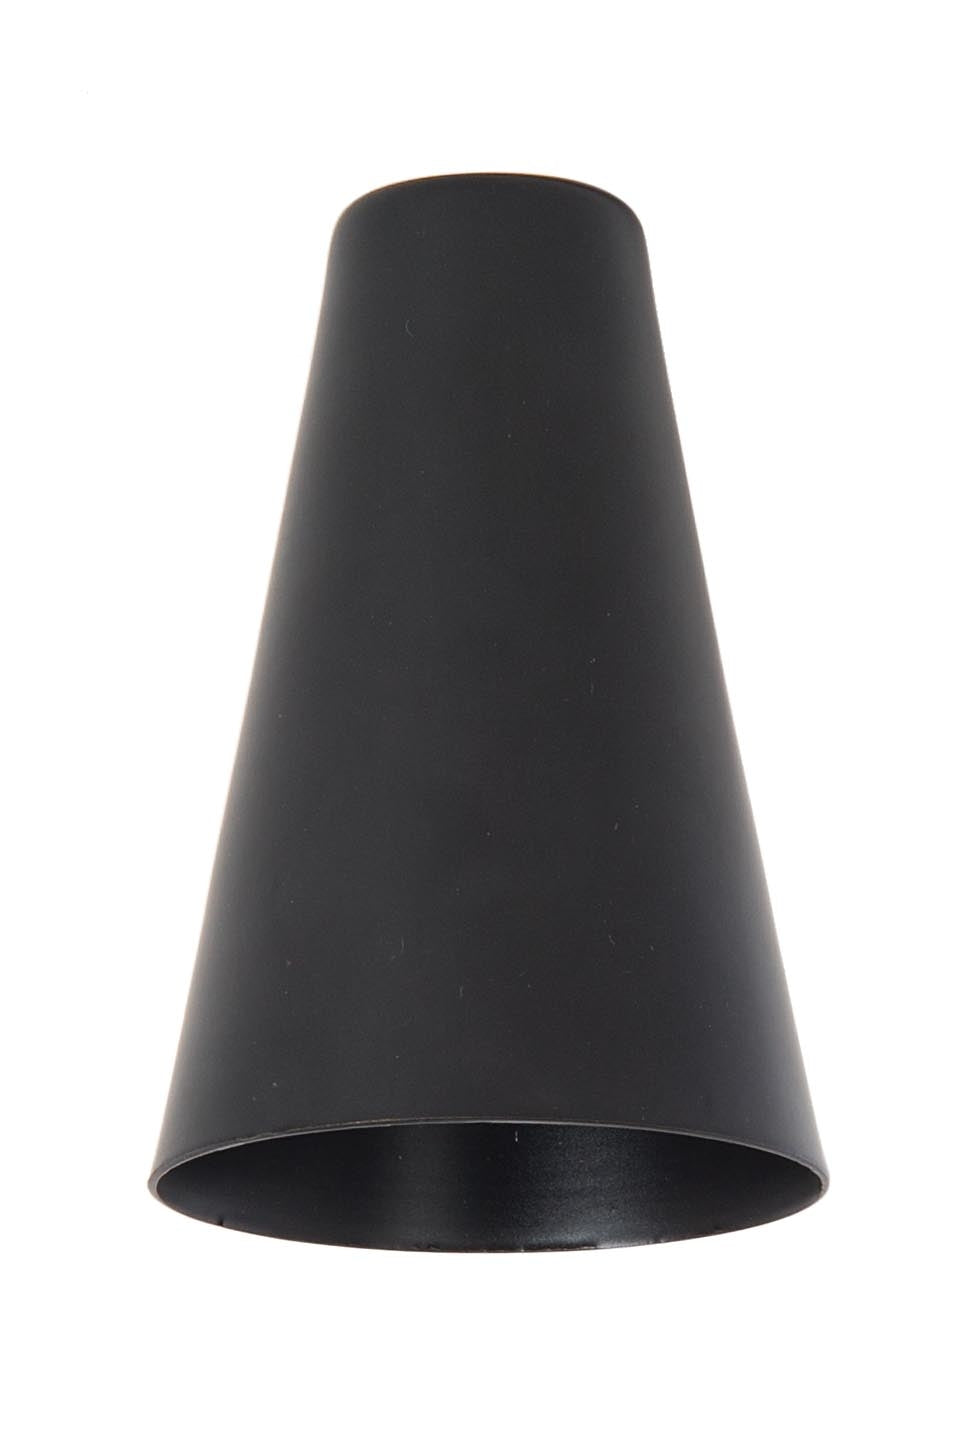 3-3/8 Inch Tall Satin Black Finish Brass Cone Lighting Socket Cup, 1/8IP